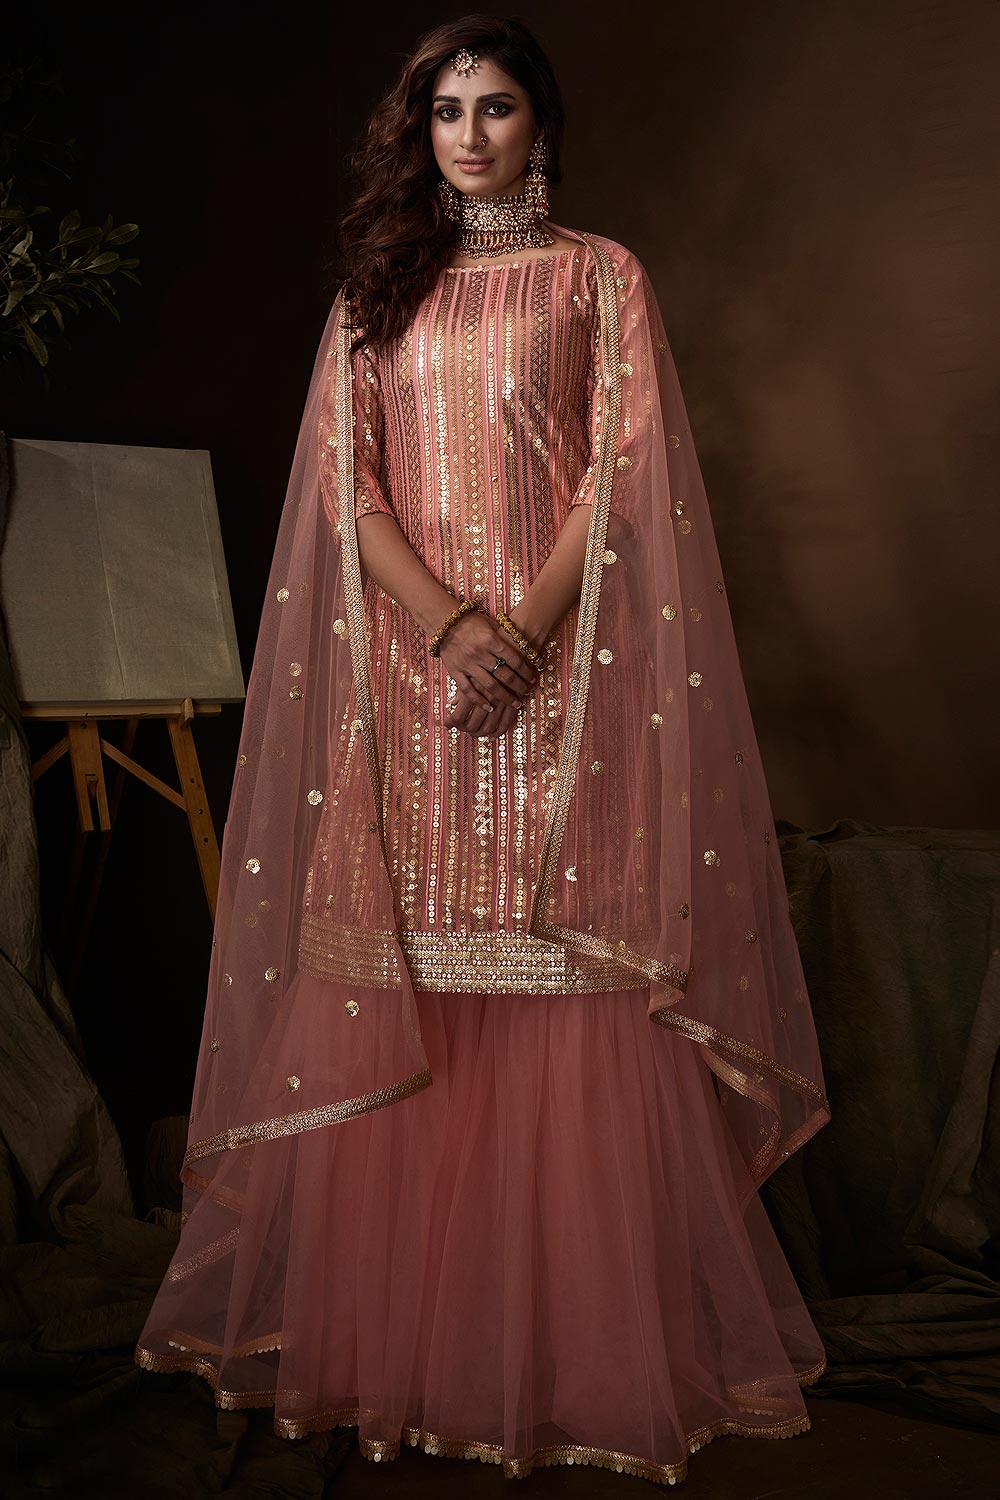 Details about   Sexy Bridal Wedding Salwar Kameez Ethnic Net Pink Peach Sharara Kurta Suit Dress 